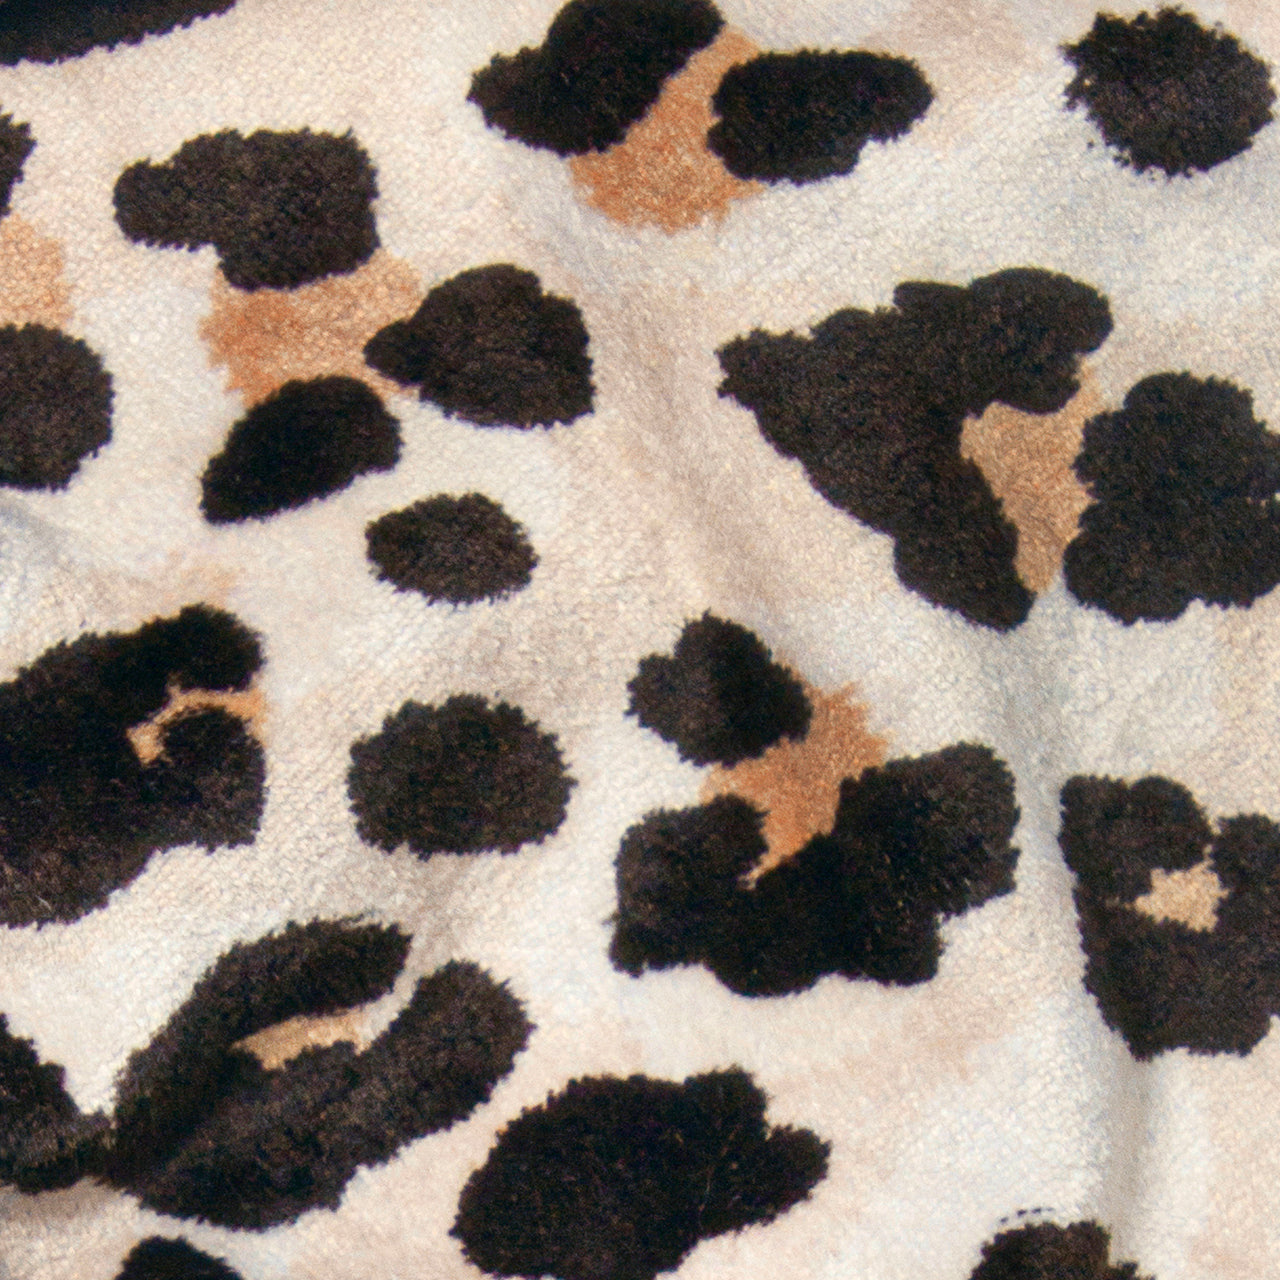 Microfiber Quick-Dry Towel Scrunchies 2pc - Leopard